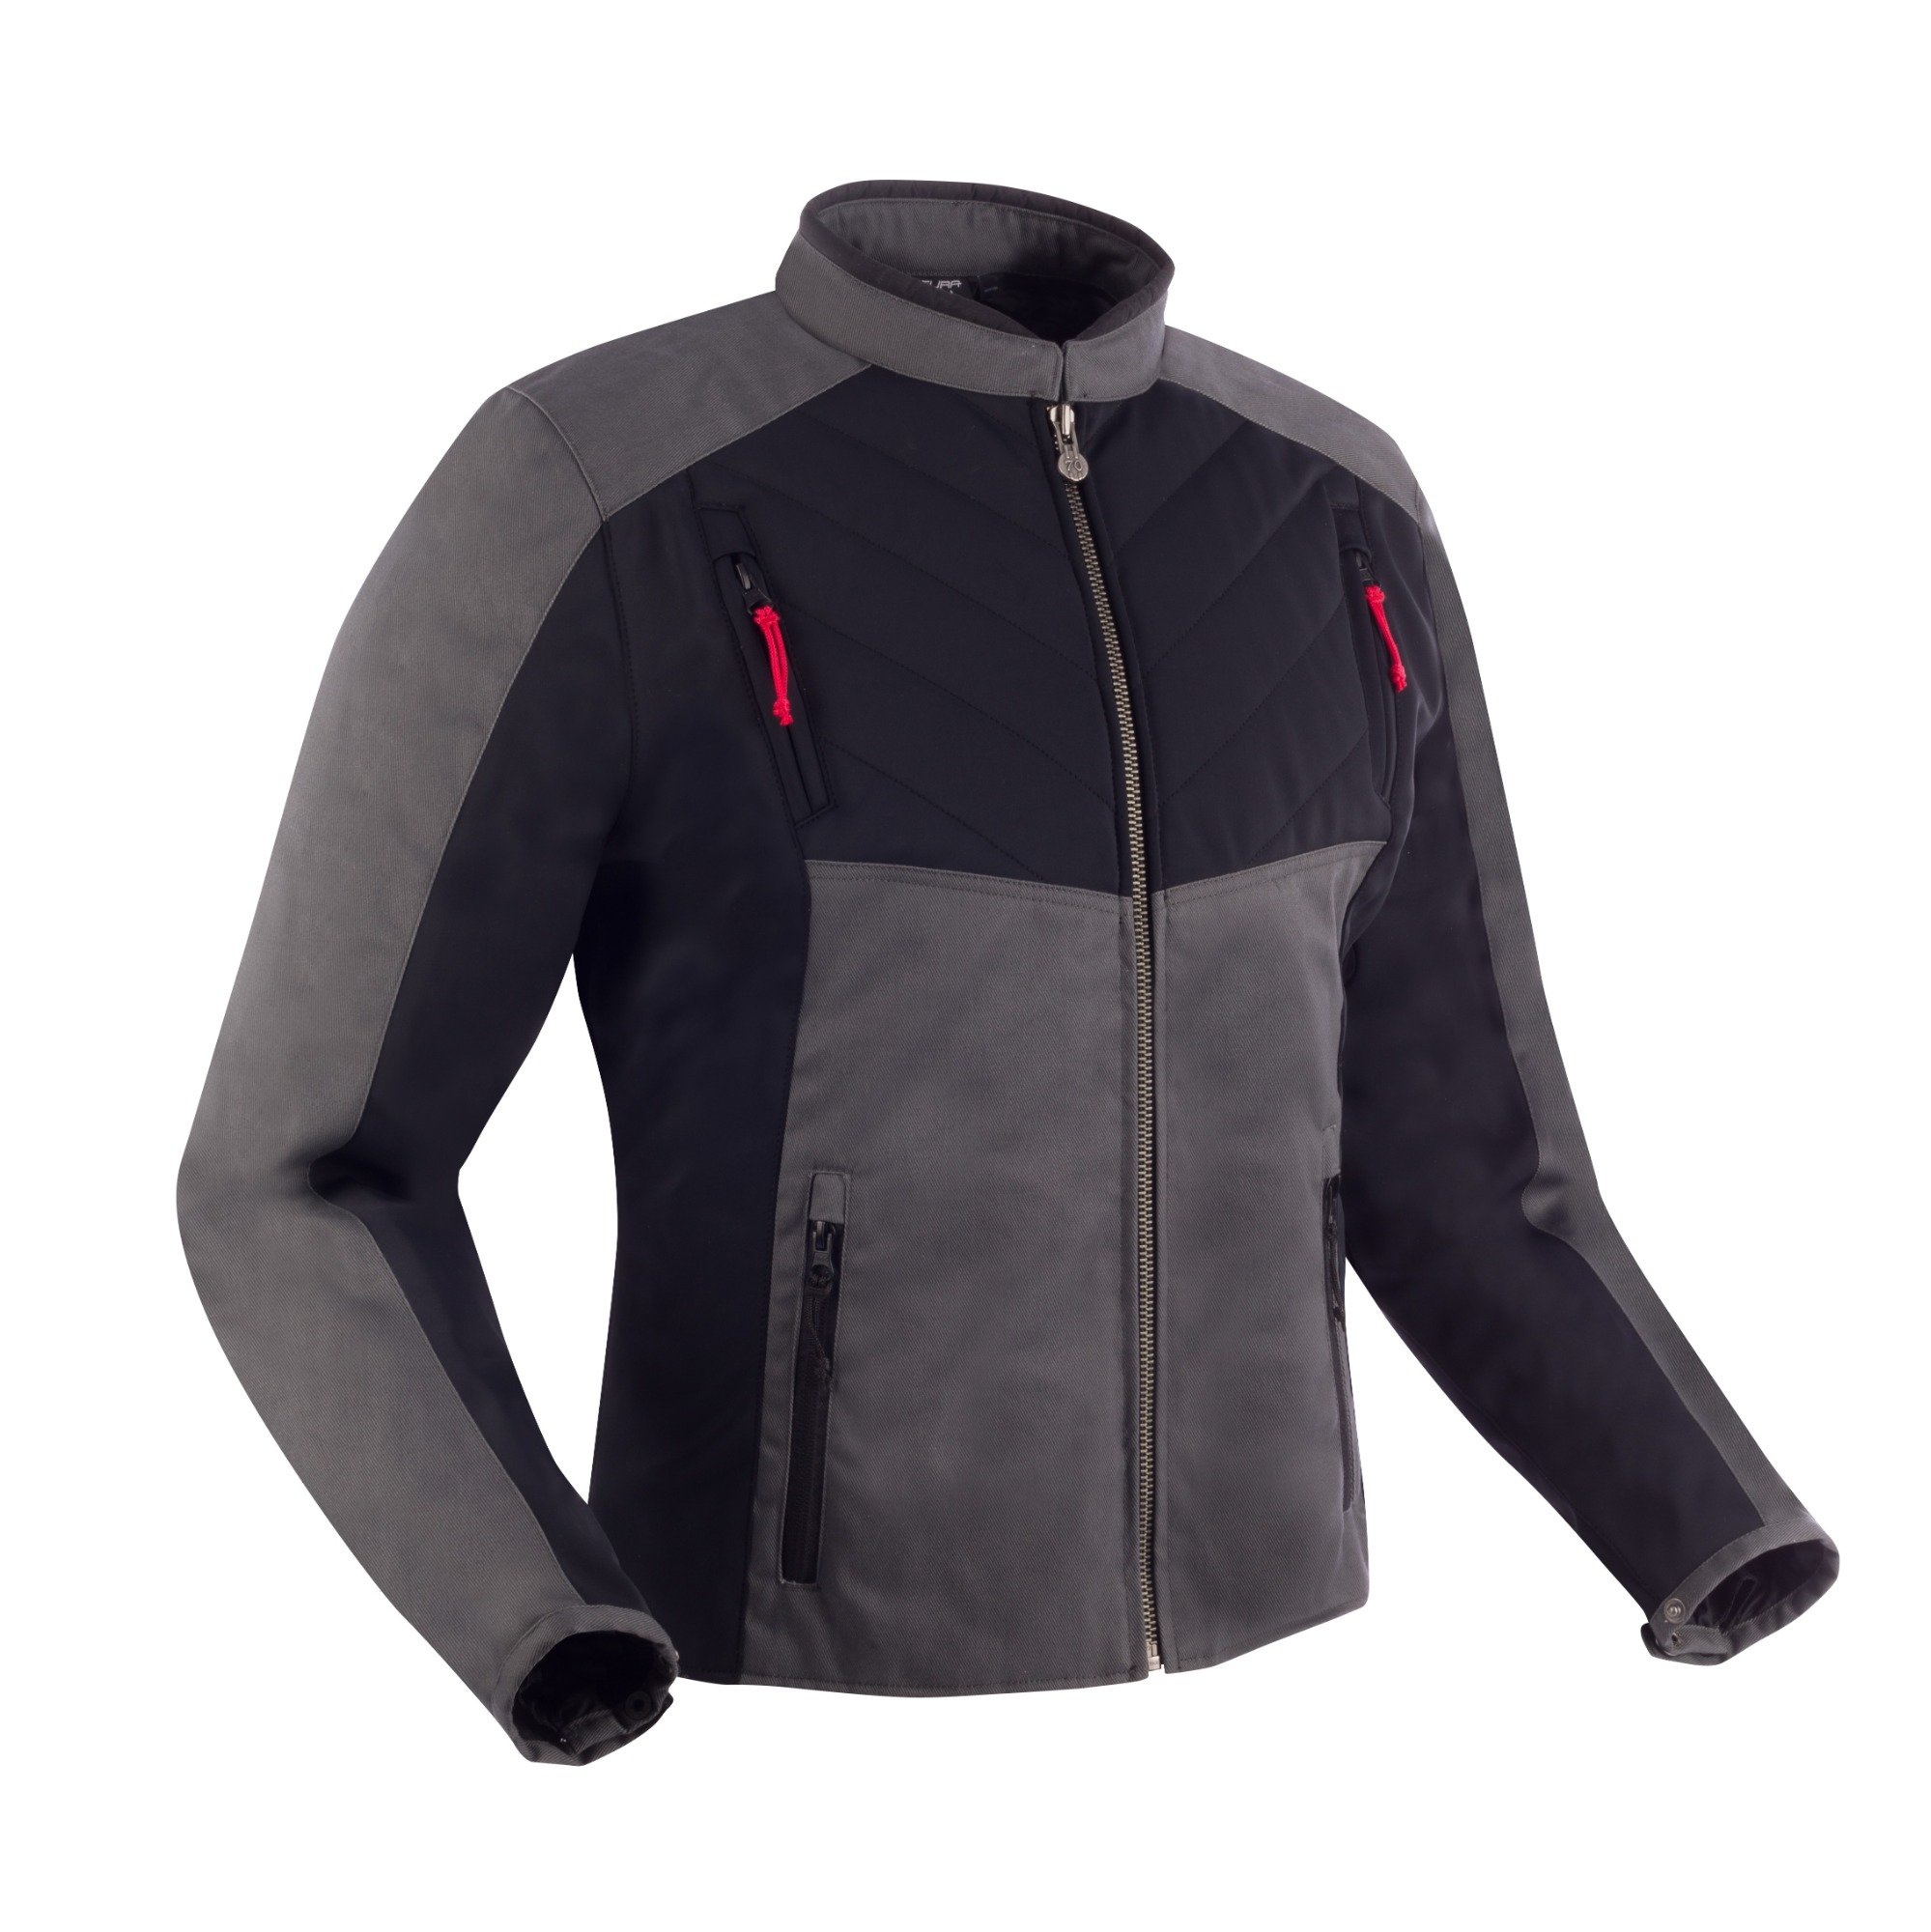 Image of Segura Volt Jacket Gray Black Size 3XL ID 3660815168882